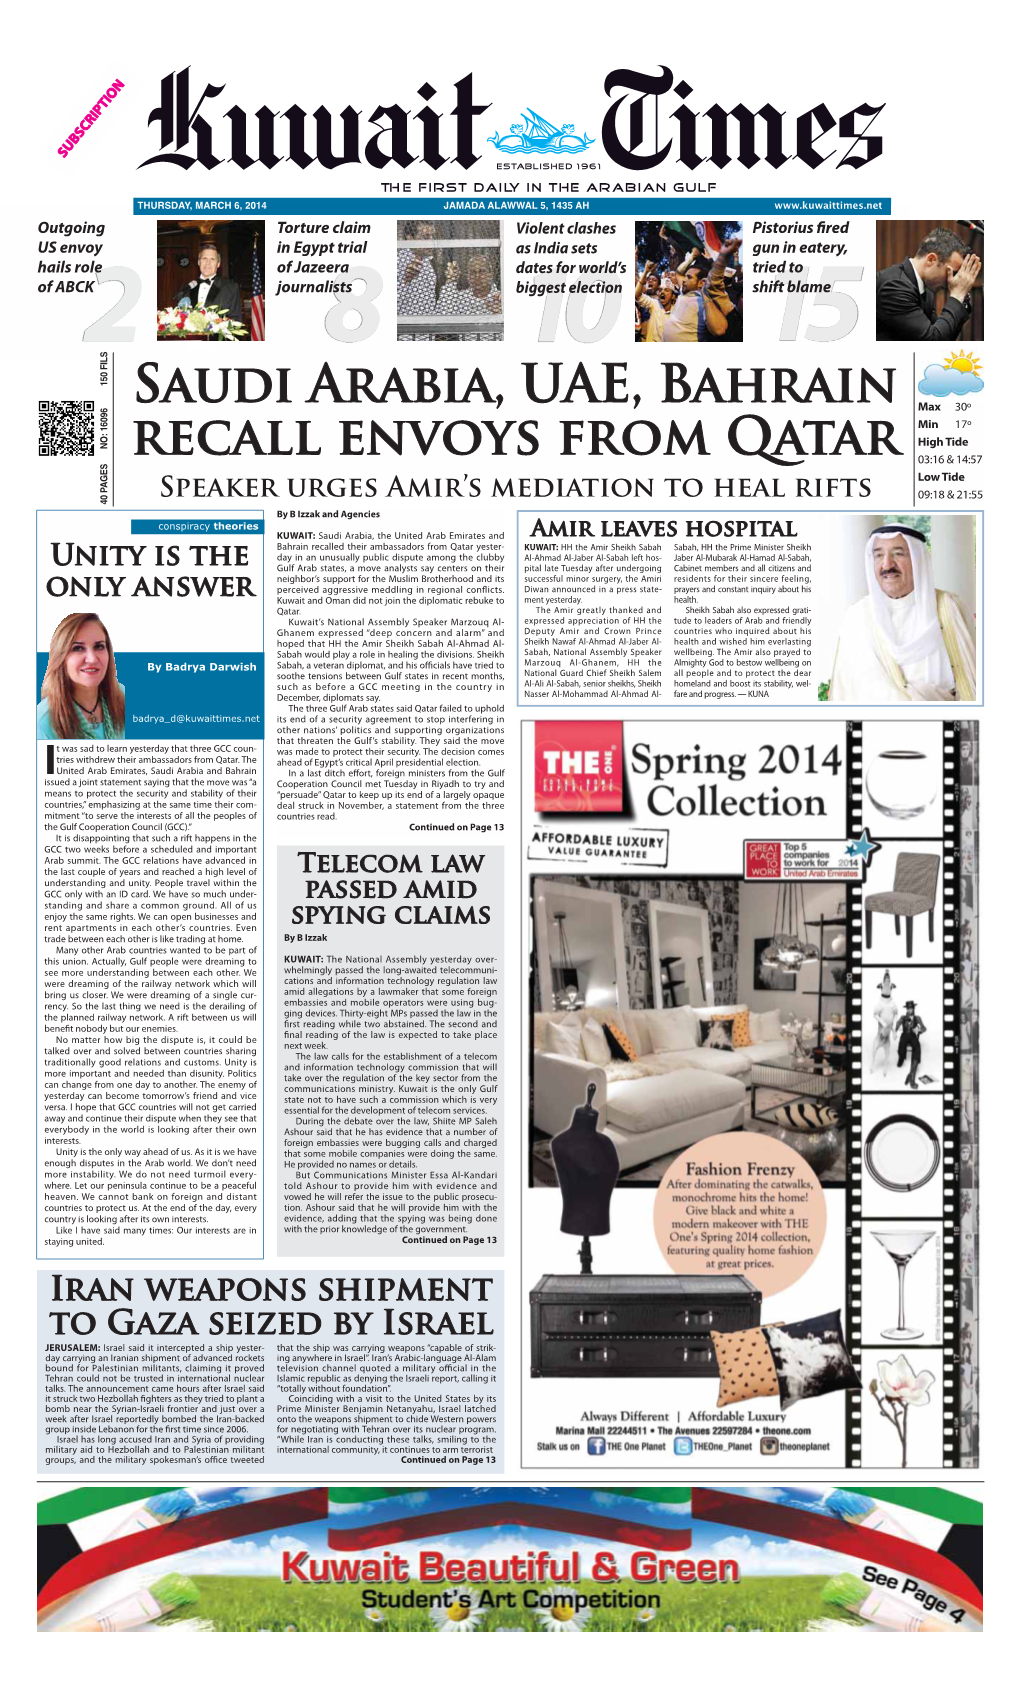 Saudi Arabia, UAE, Bahrain Recall Envoys from Qatar